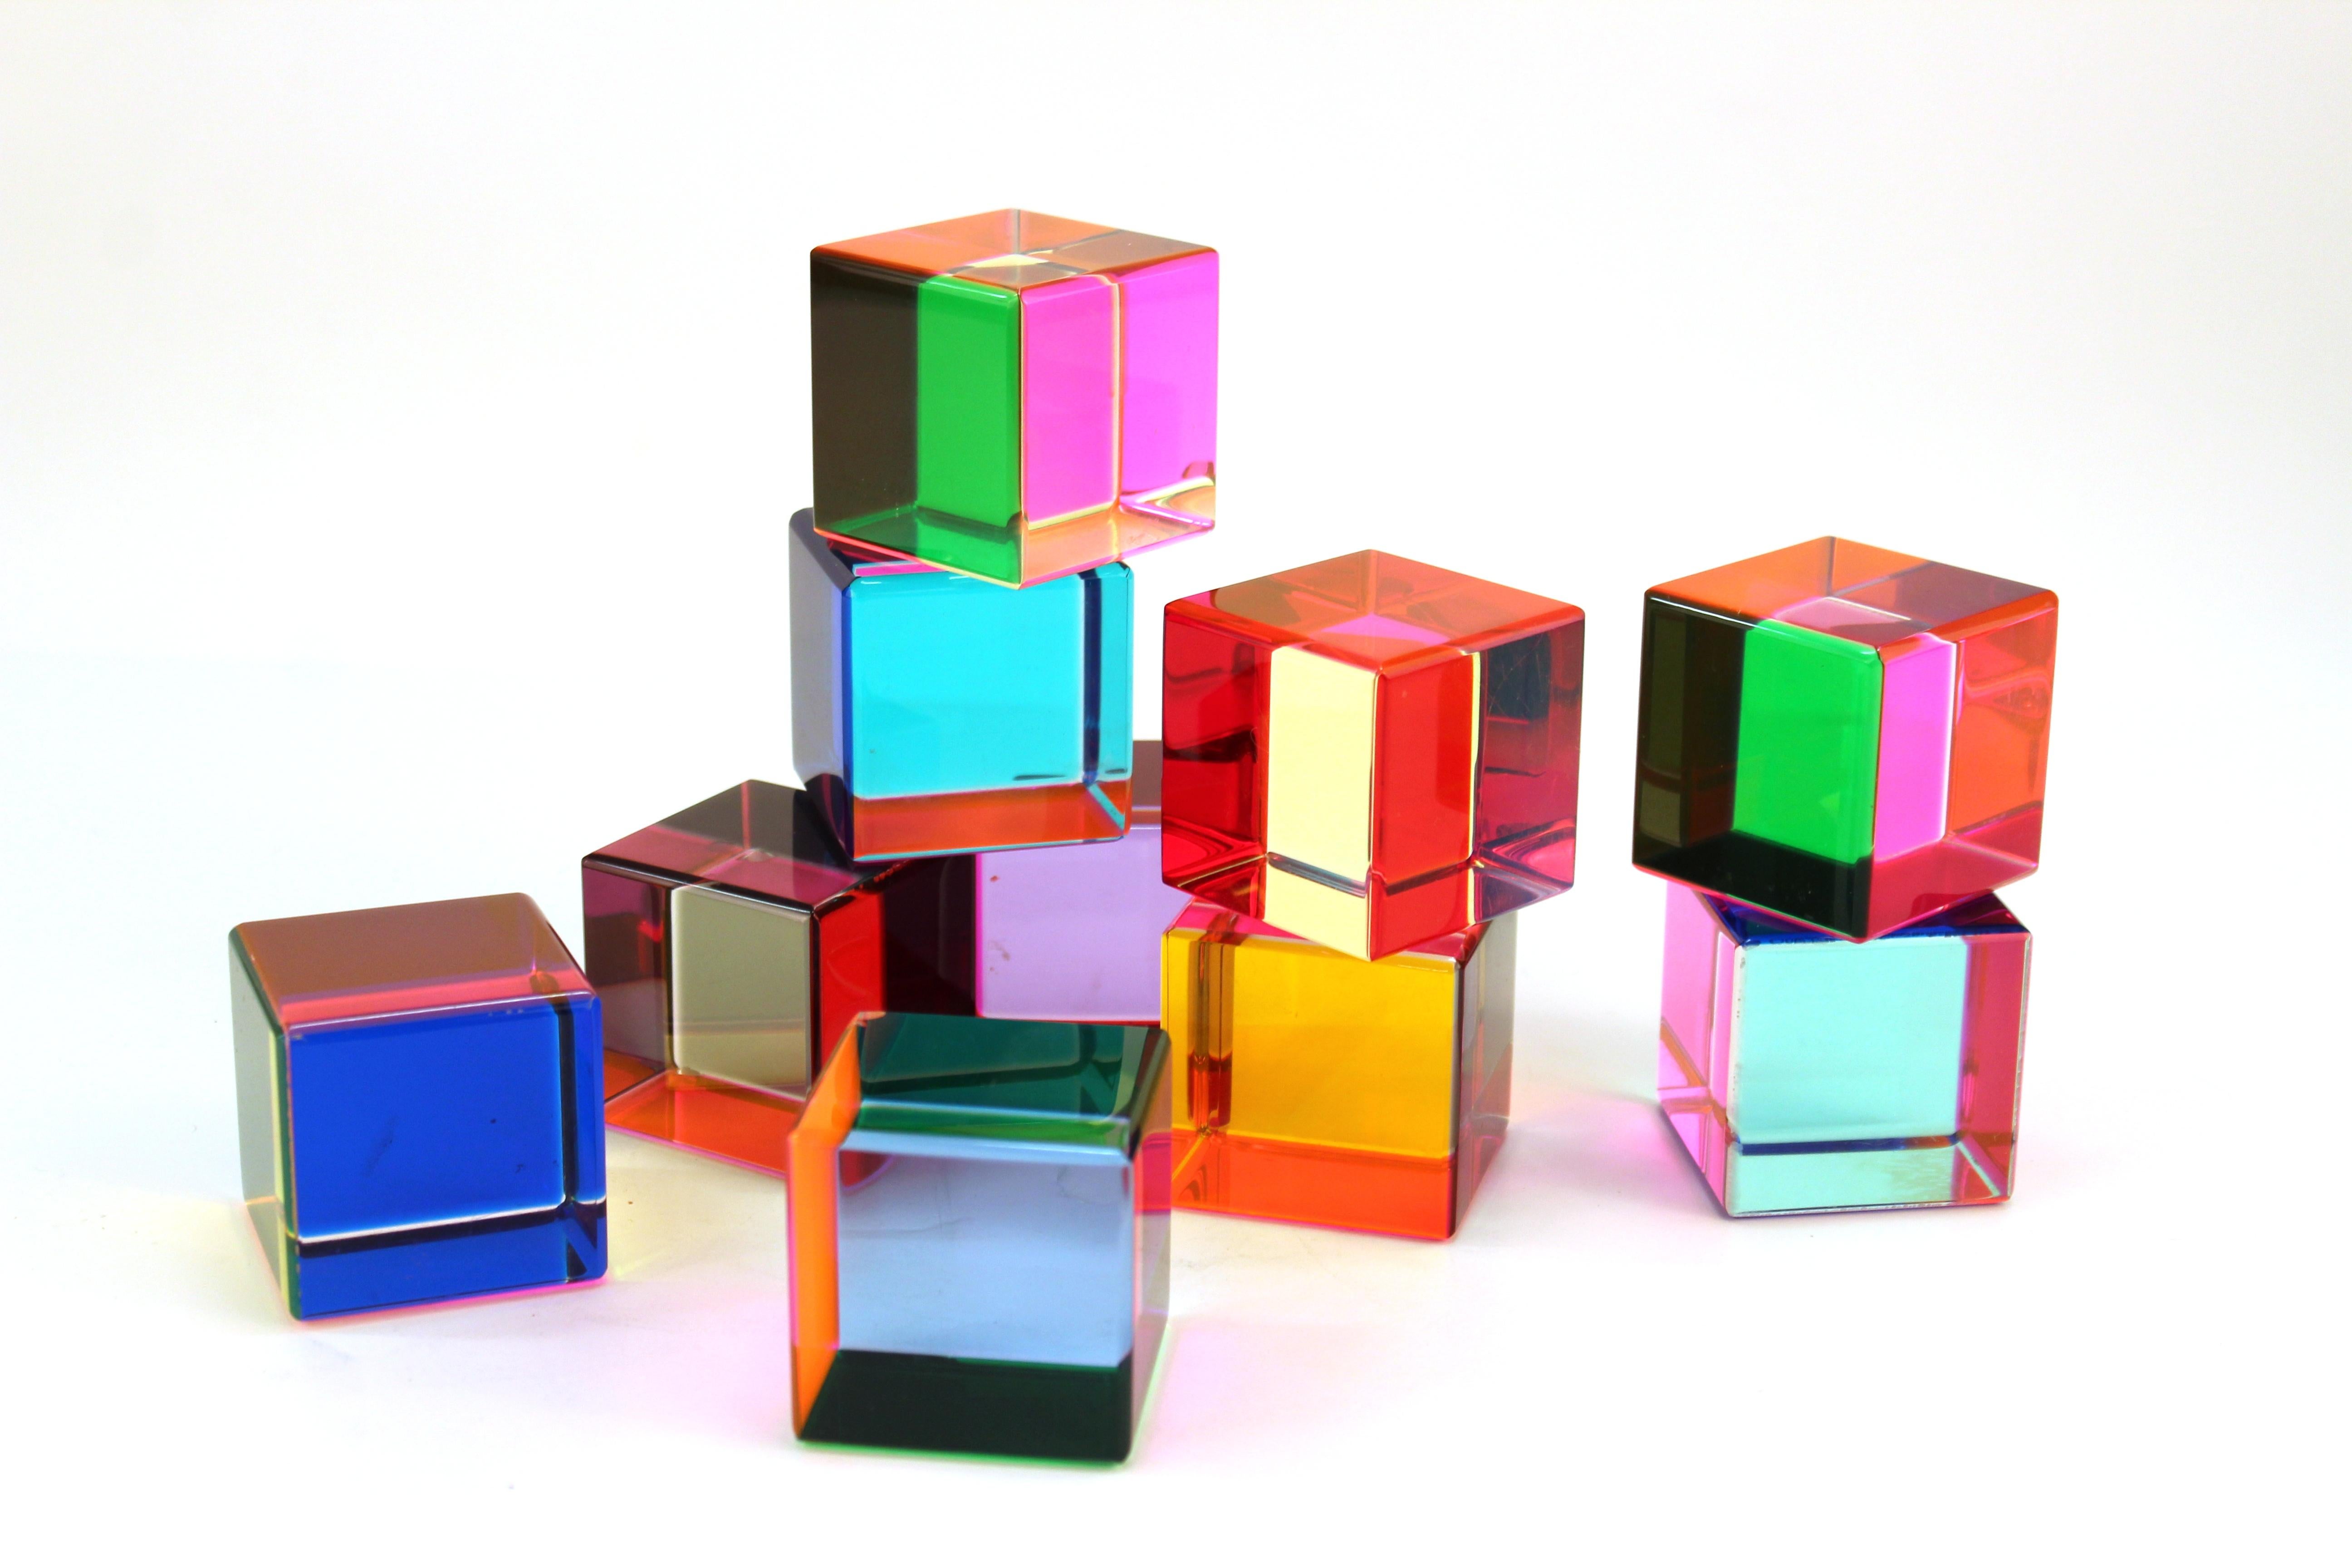 vasa mihich's cast acrylic cubes